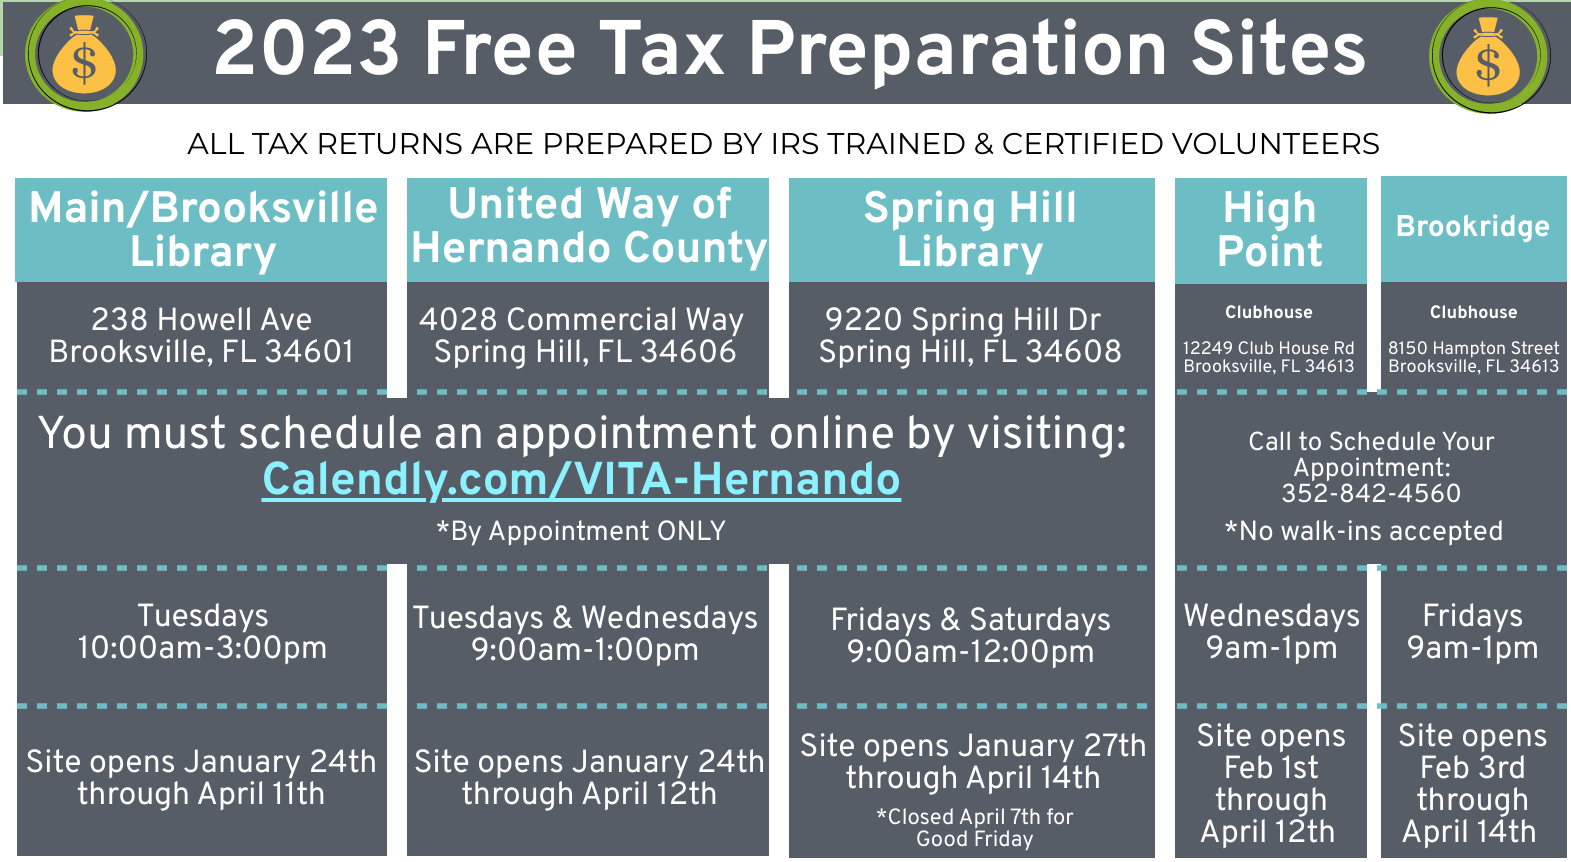 2023 Free Tax Preparations Sites